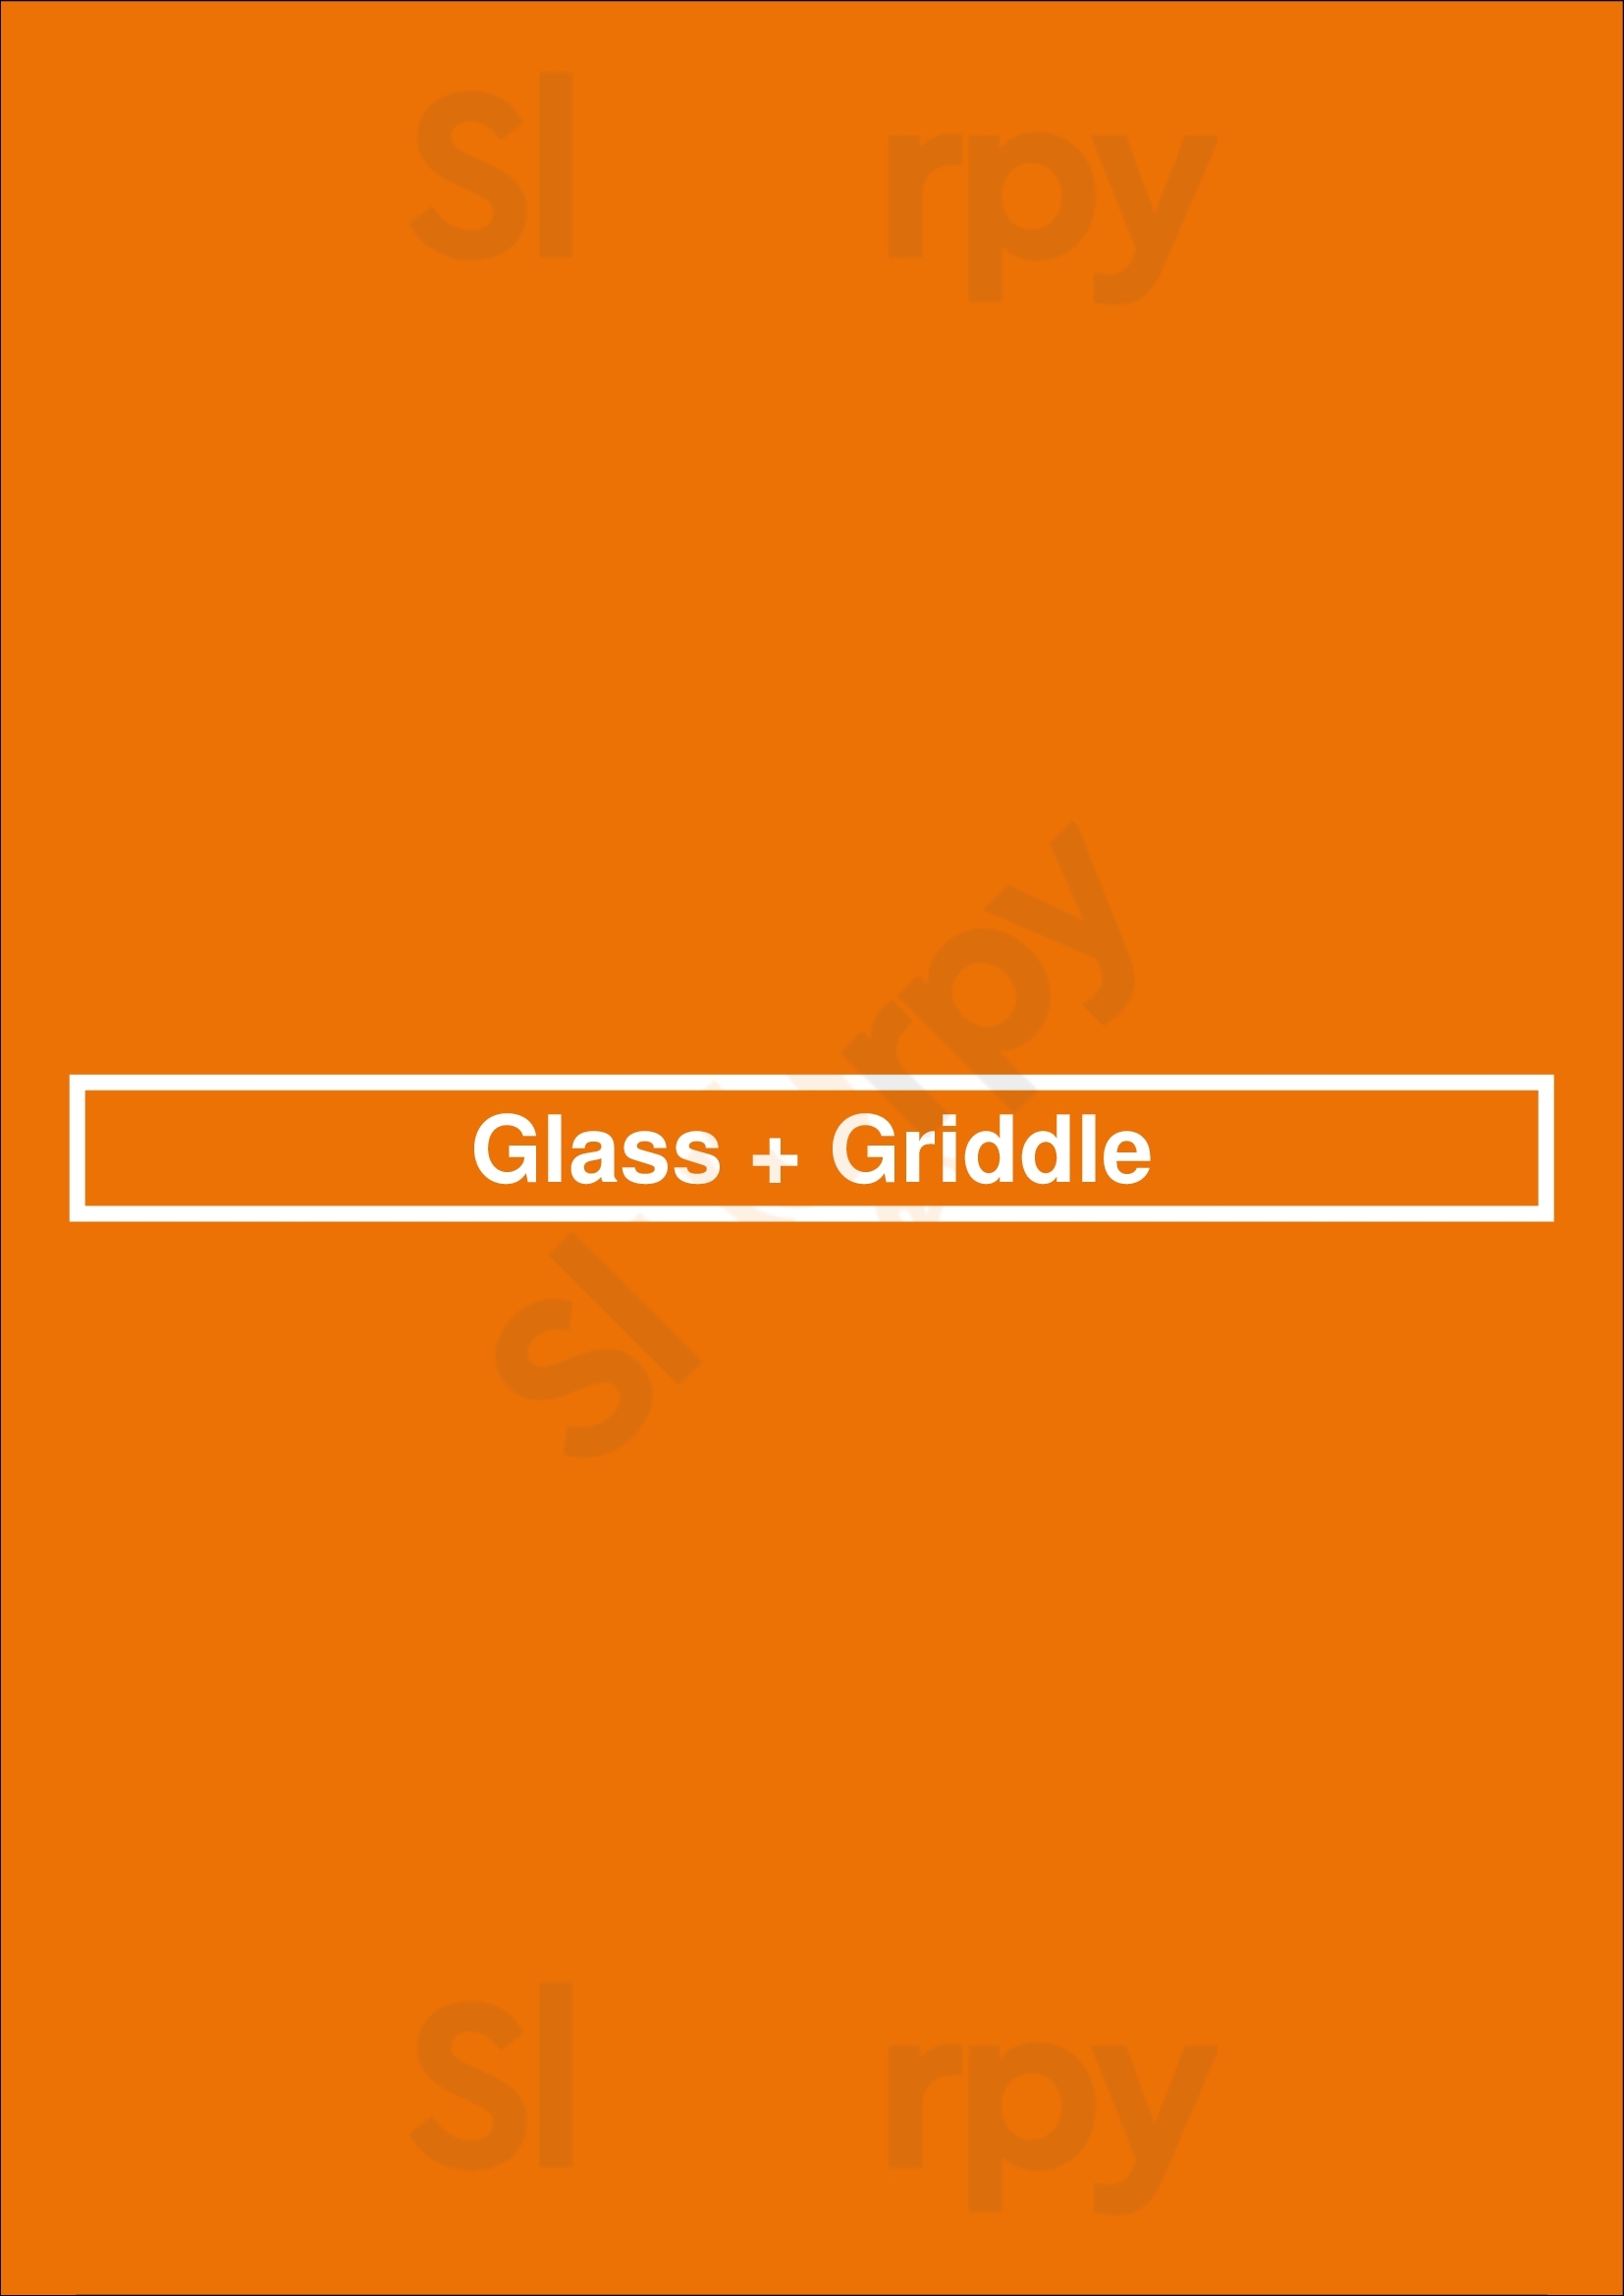 Glass + Griddle Milwaukee Menu - 1